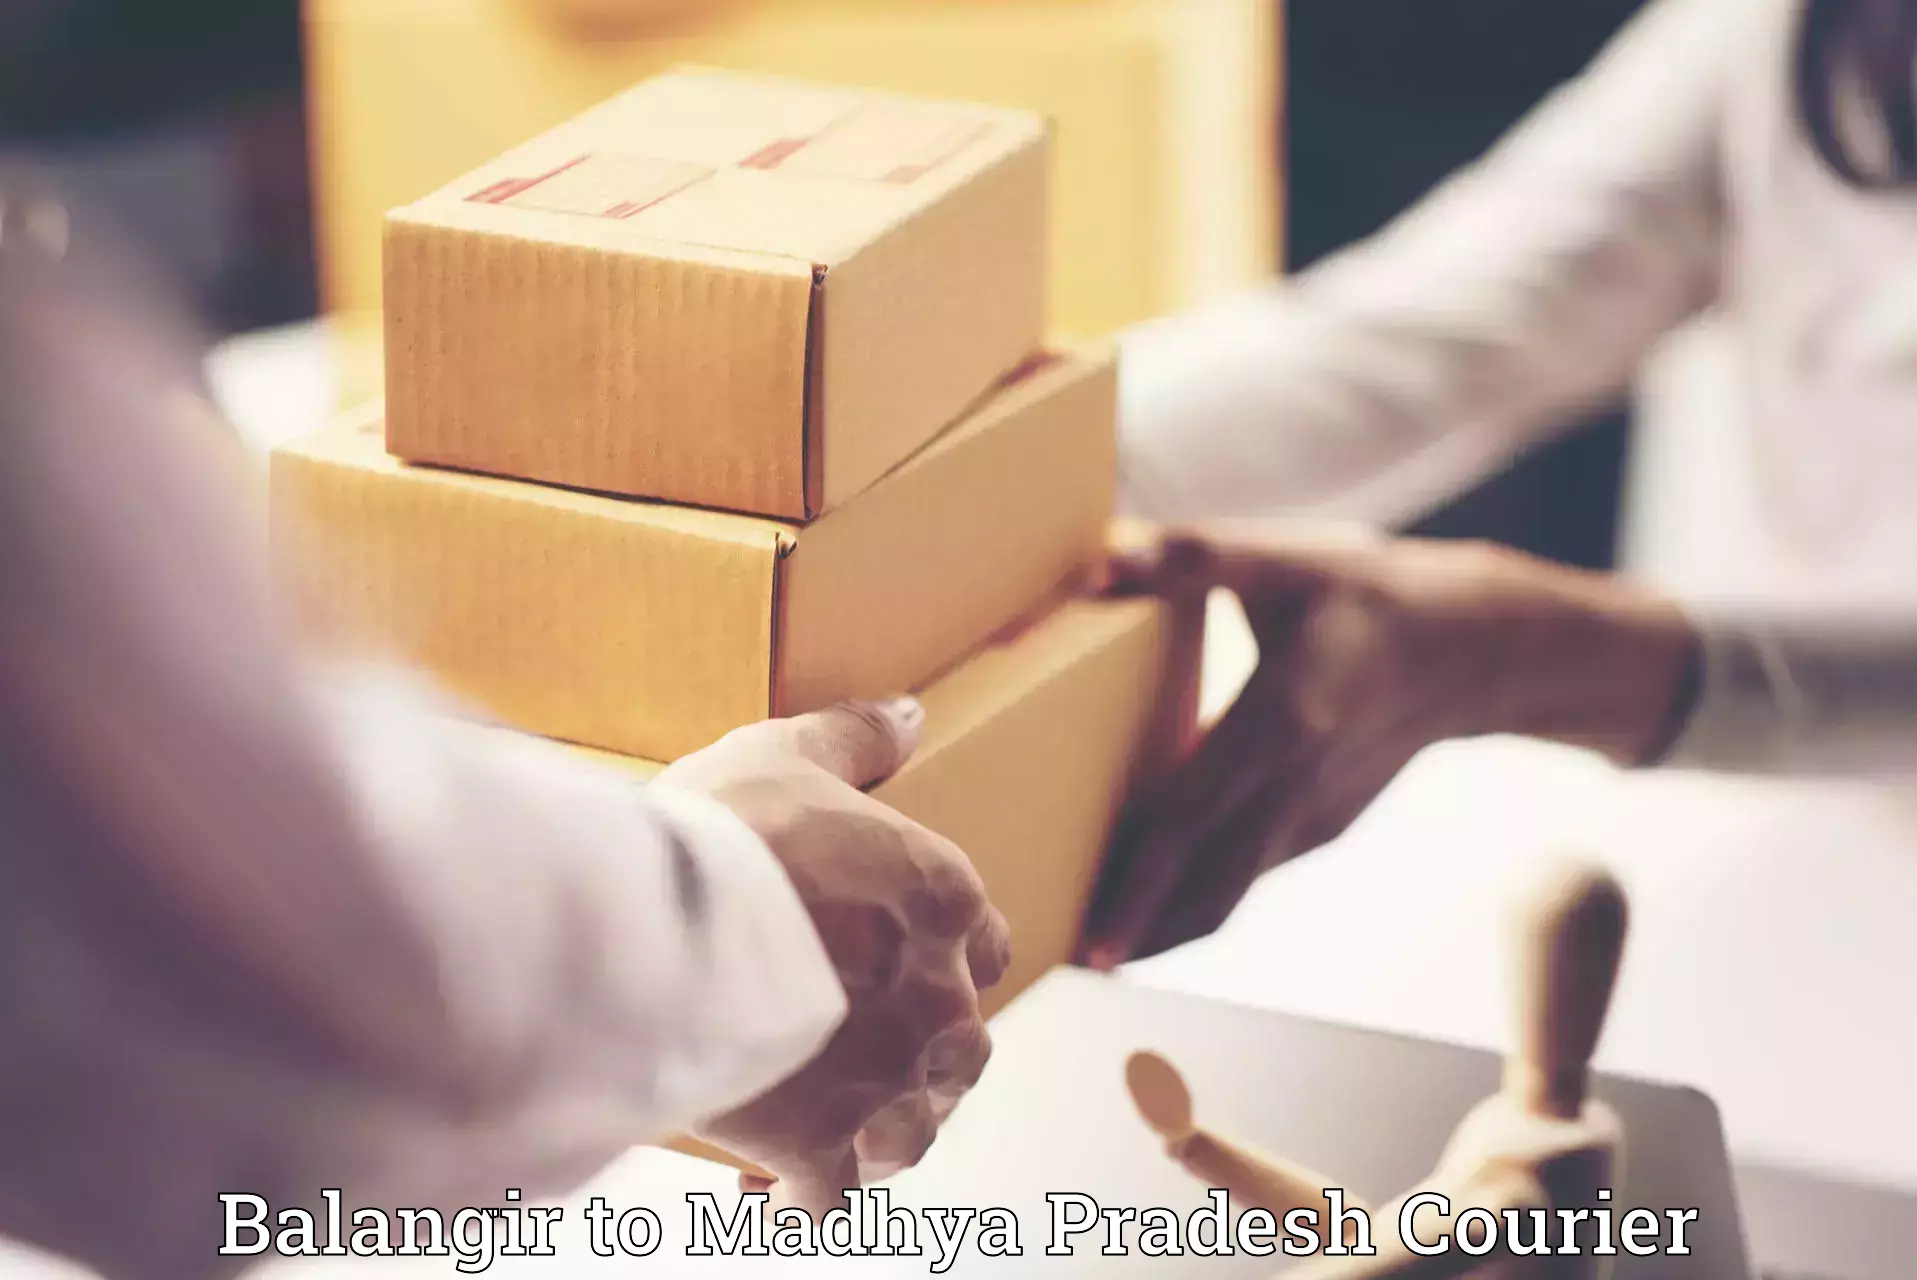 Furniture delivery service Balangir to Shujalpur